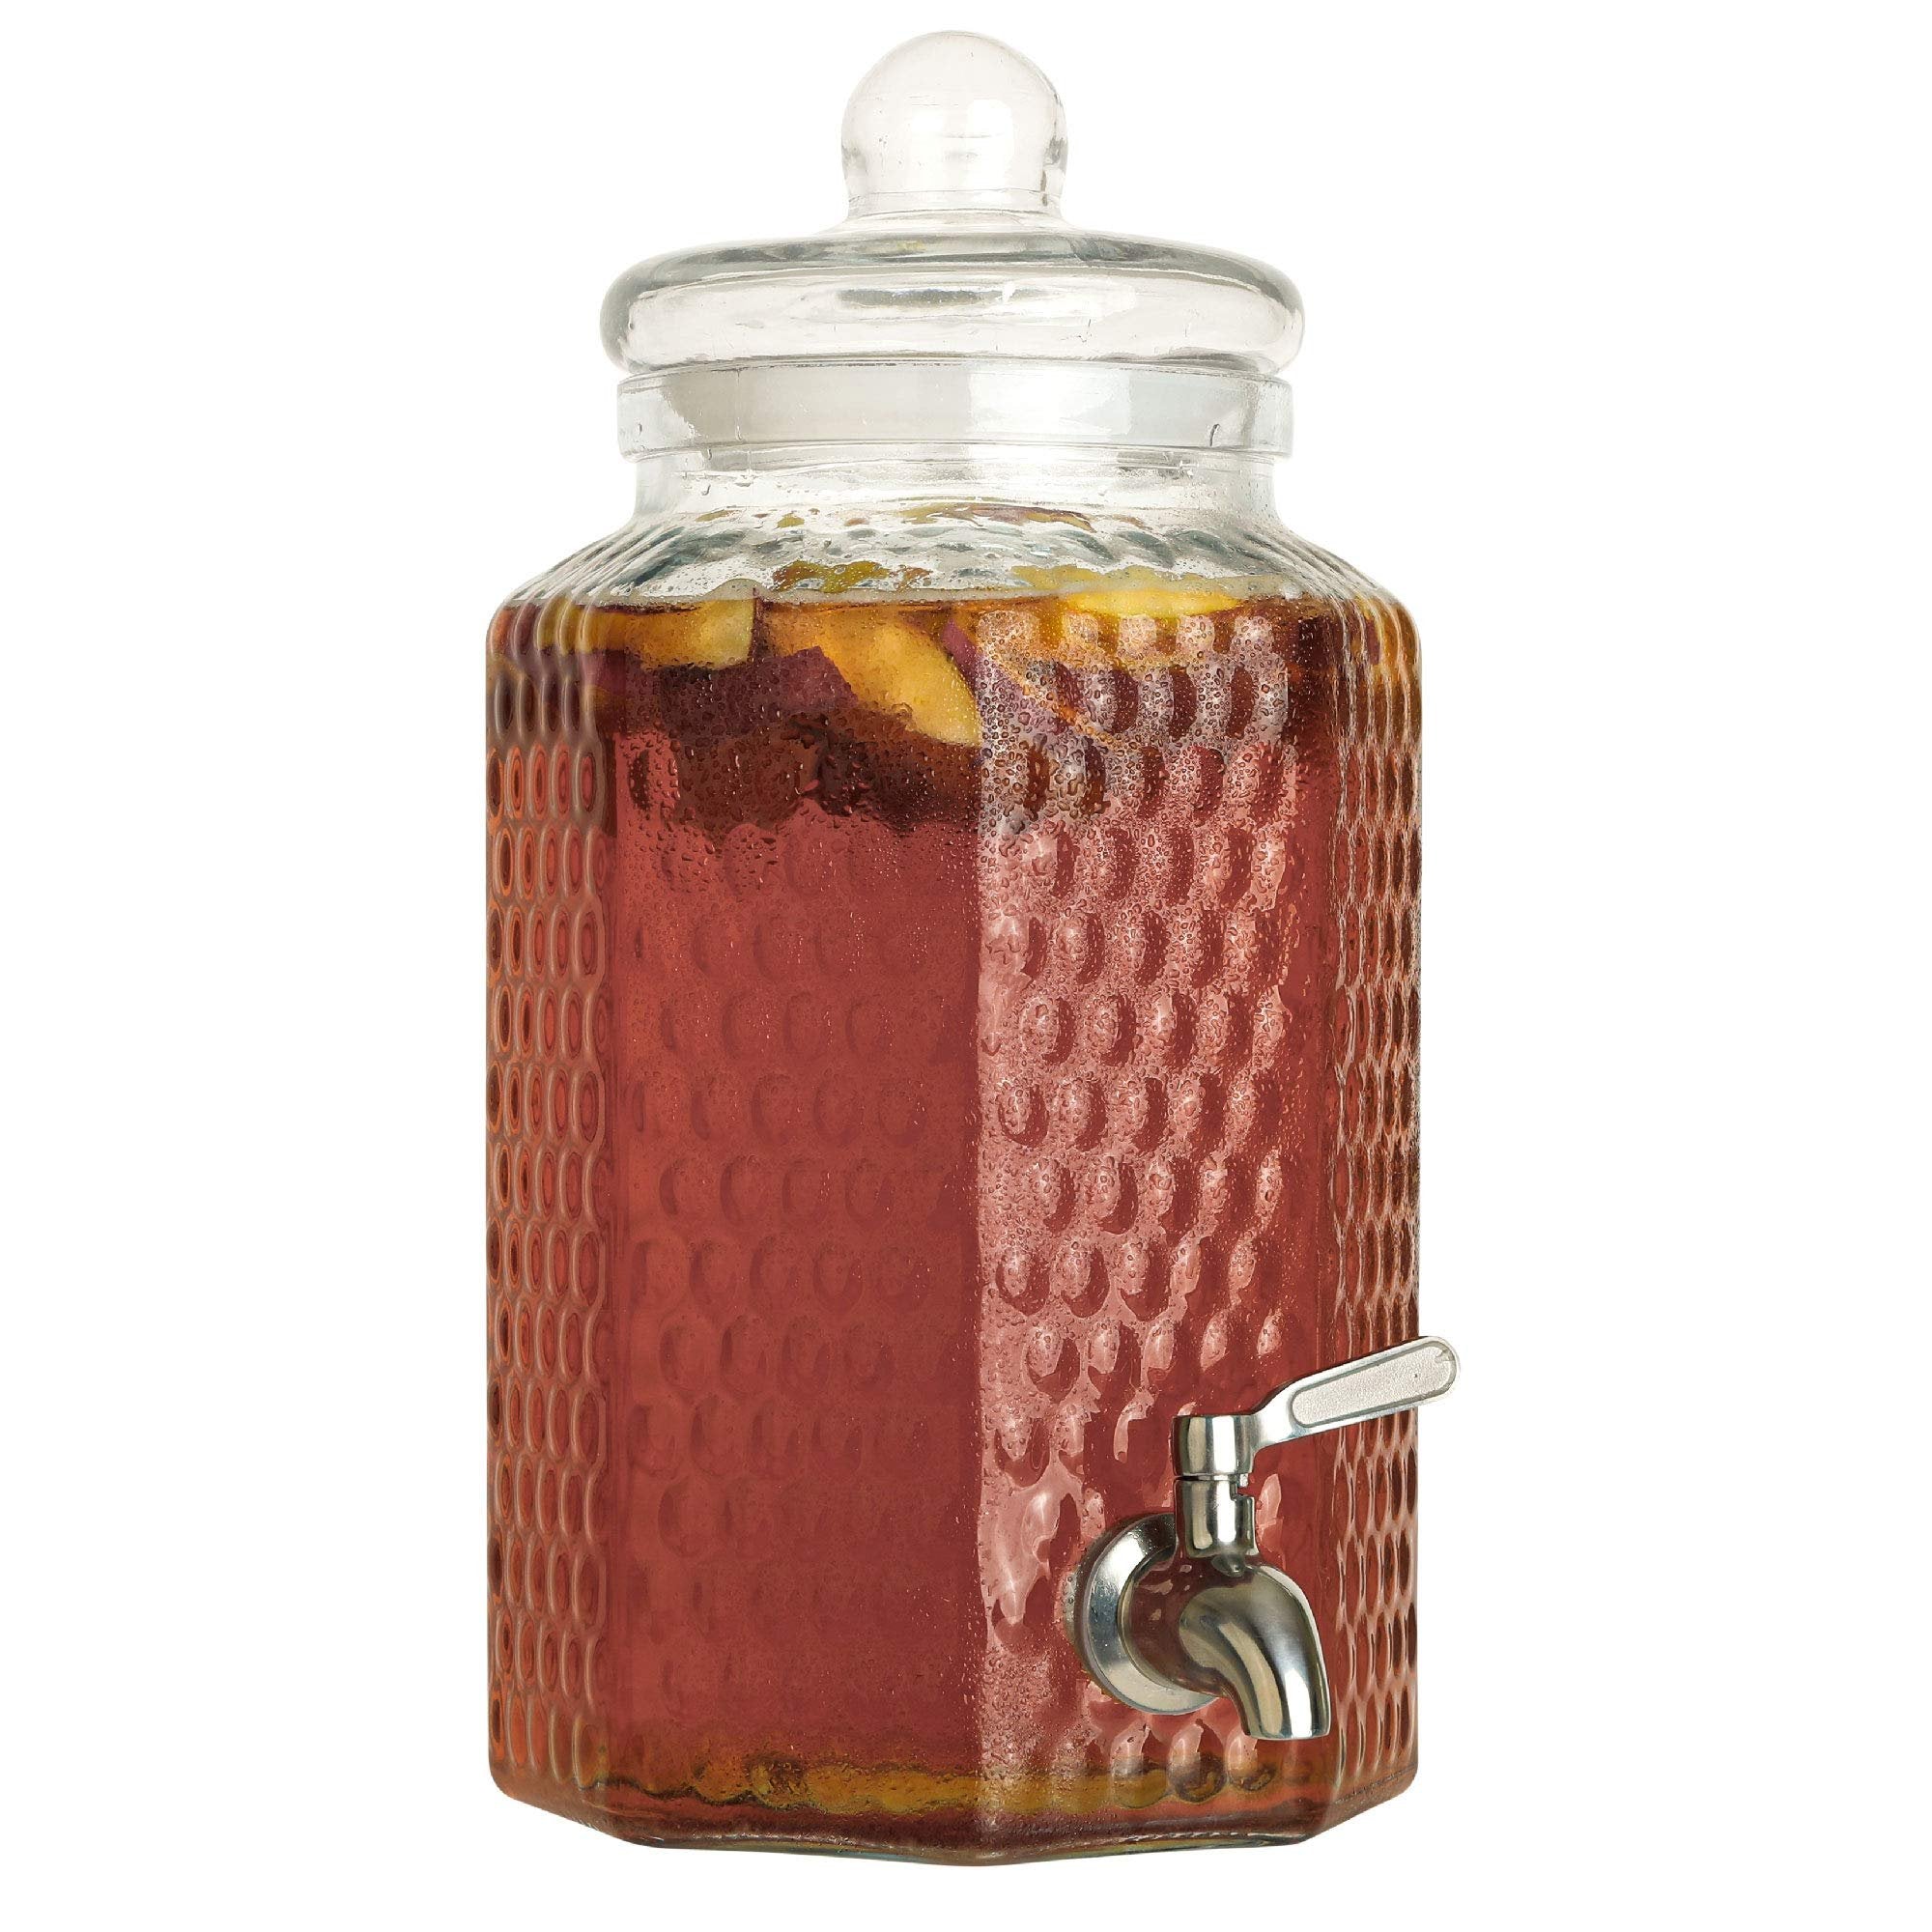 1 Gallon Glass Beverage Dispenser with Stainless Steel Spigot - Decorative Mason Jar Drink Dispenser for Parties, Fridge, Sun Tea, Iced Tea, Kombucha and Water